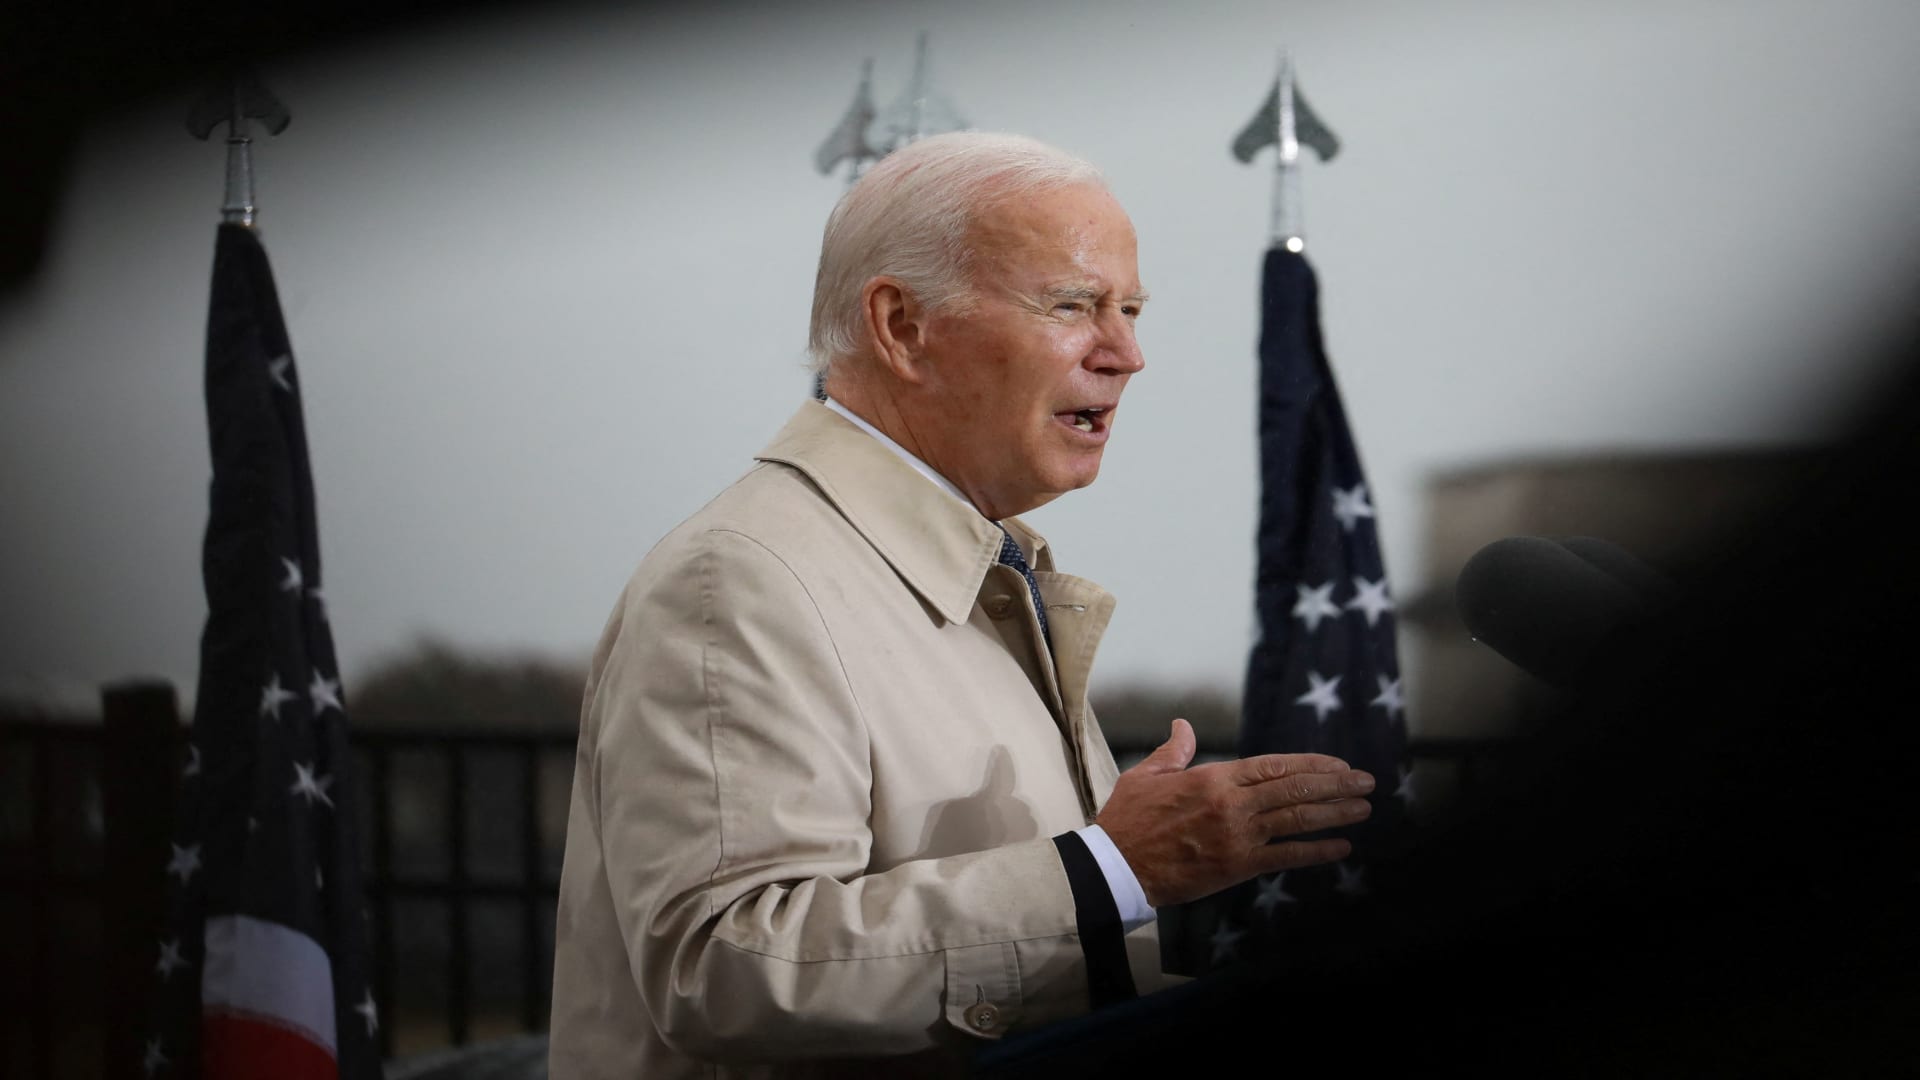 On 9/11 anniversary, Biden recalls American unity and vows vigilance